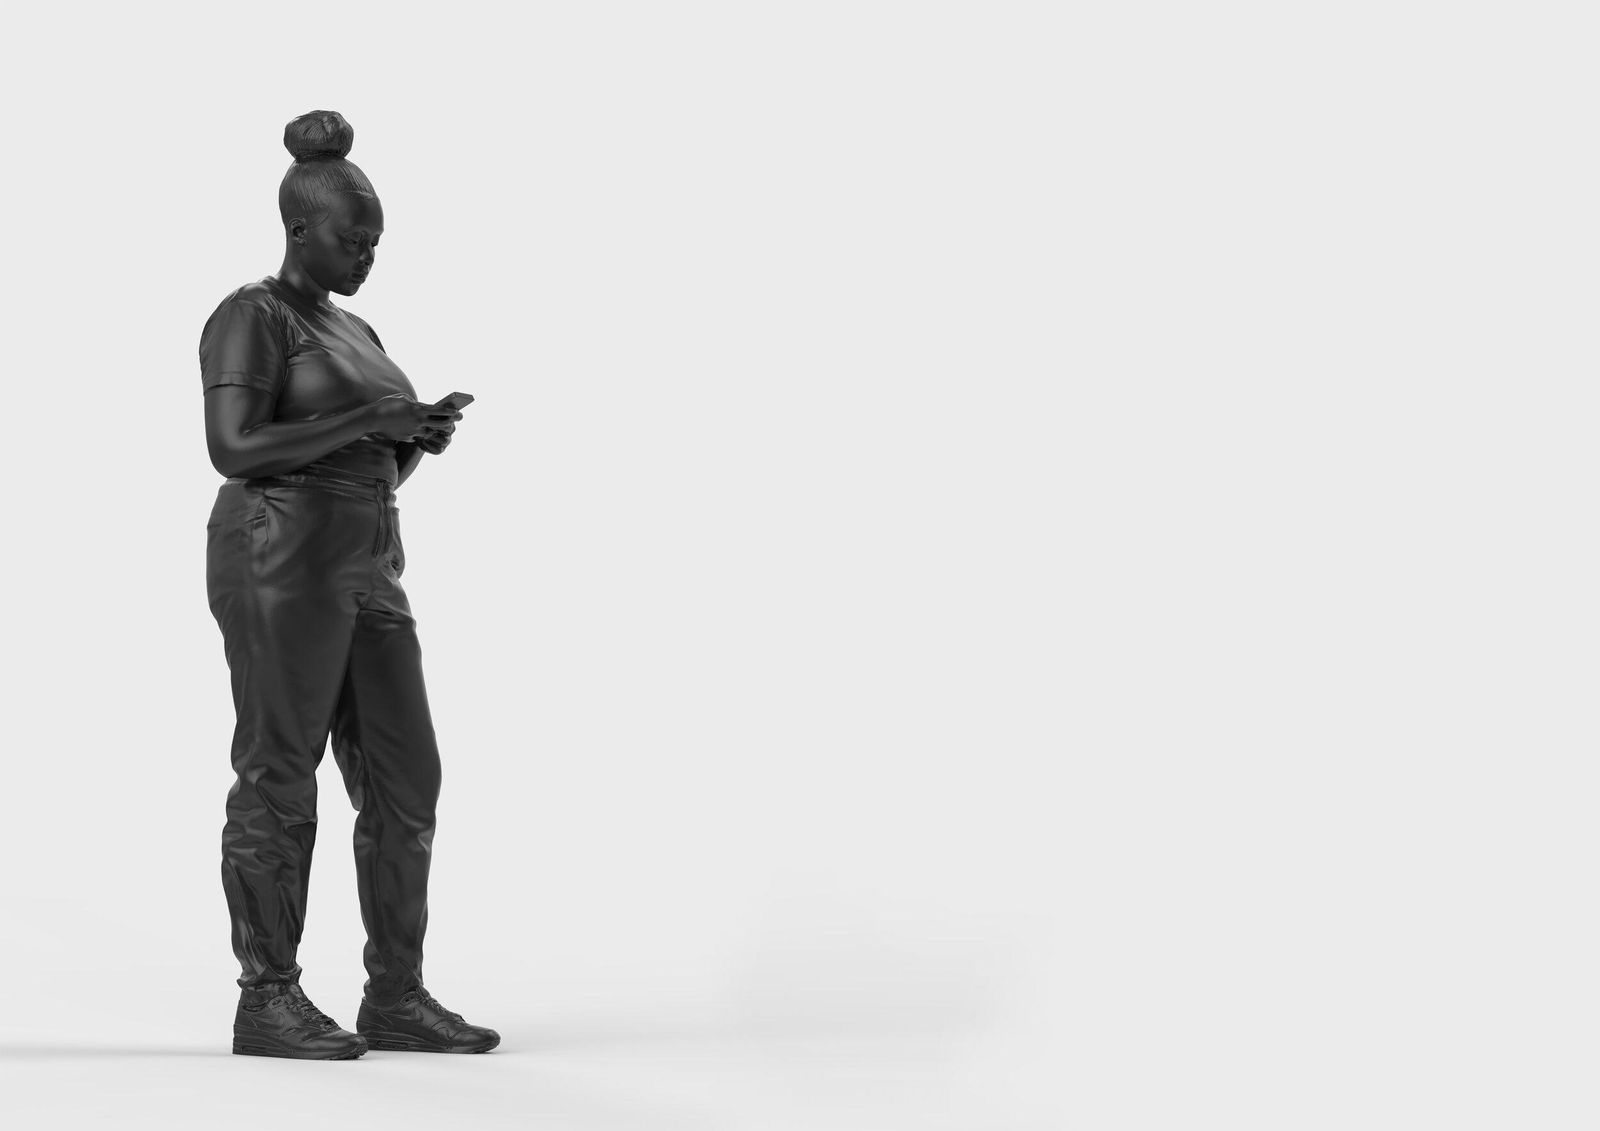 Amid Reckoning on Public Art, Statue of Black 'Everywoman